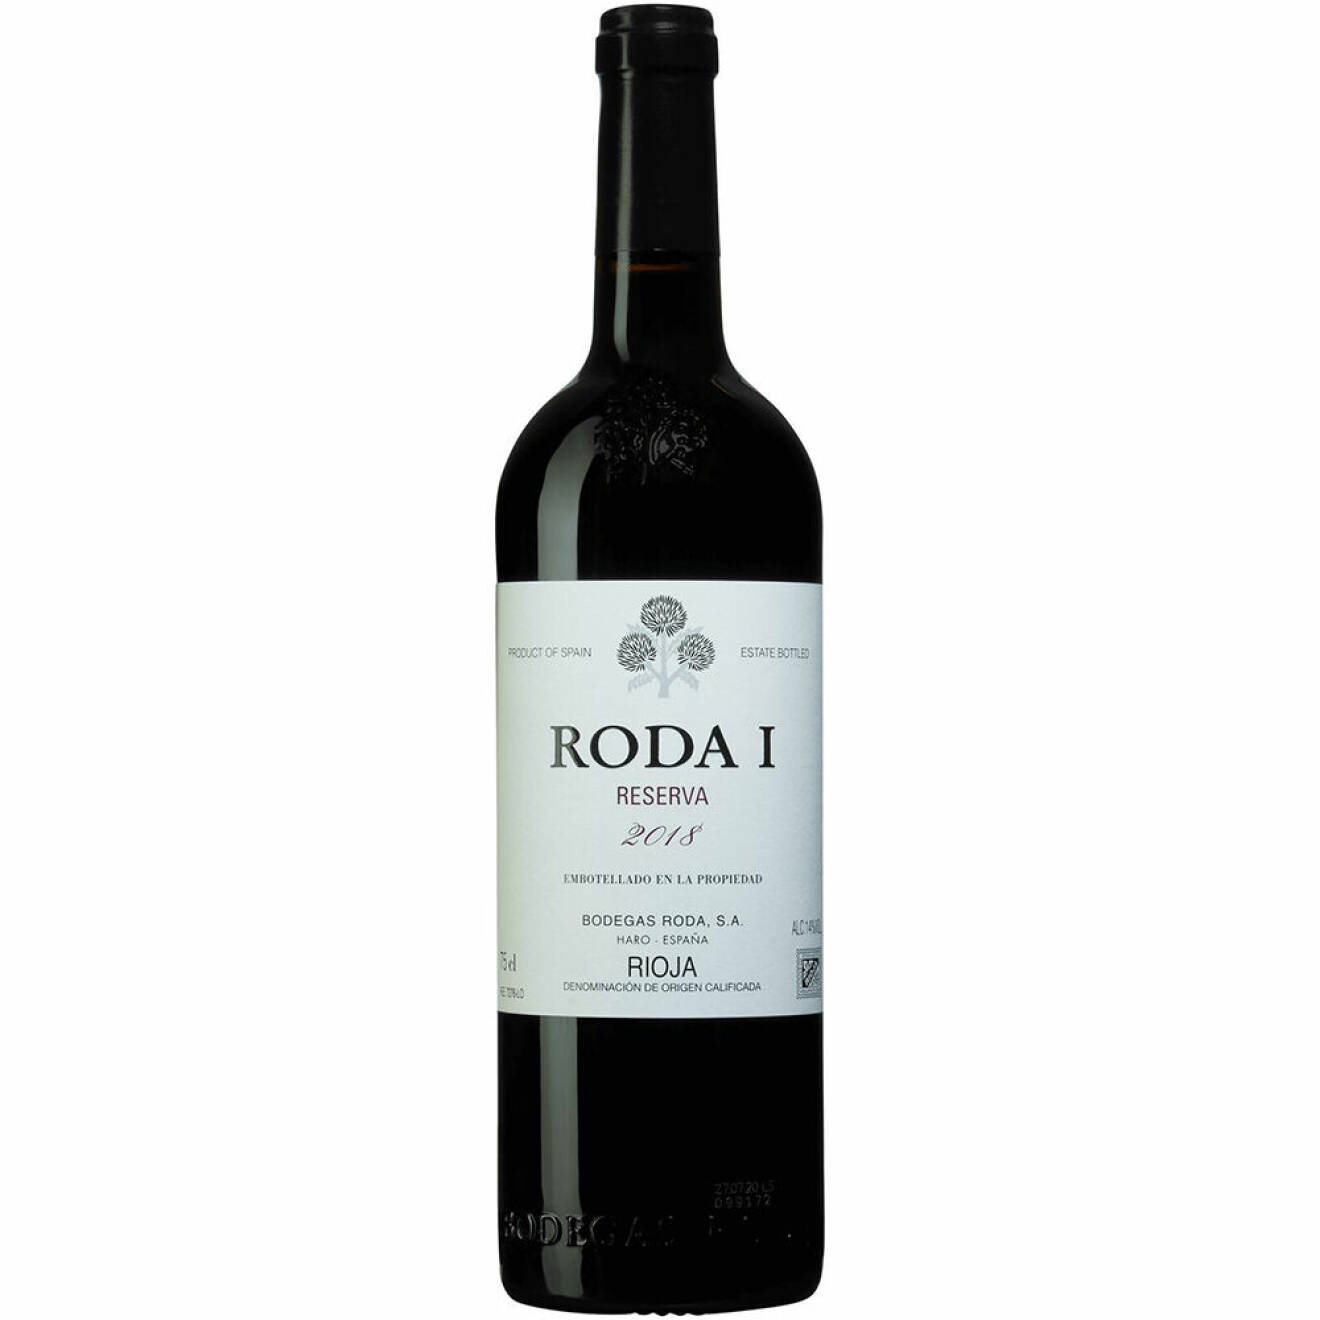 Roda I 2018, Spanien, Rioja (94342) 491 kr, TS.